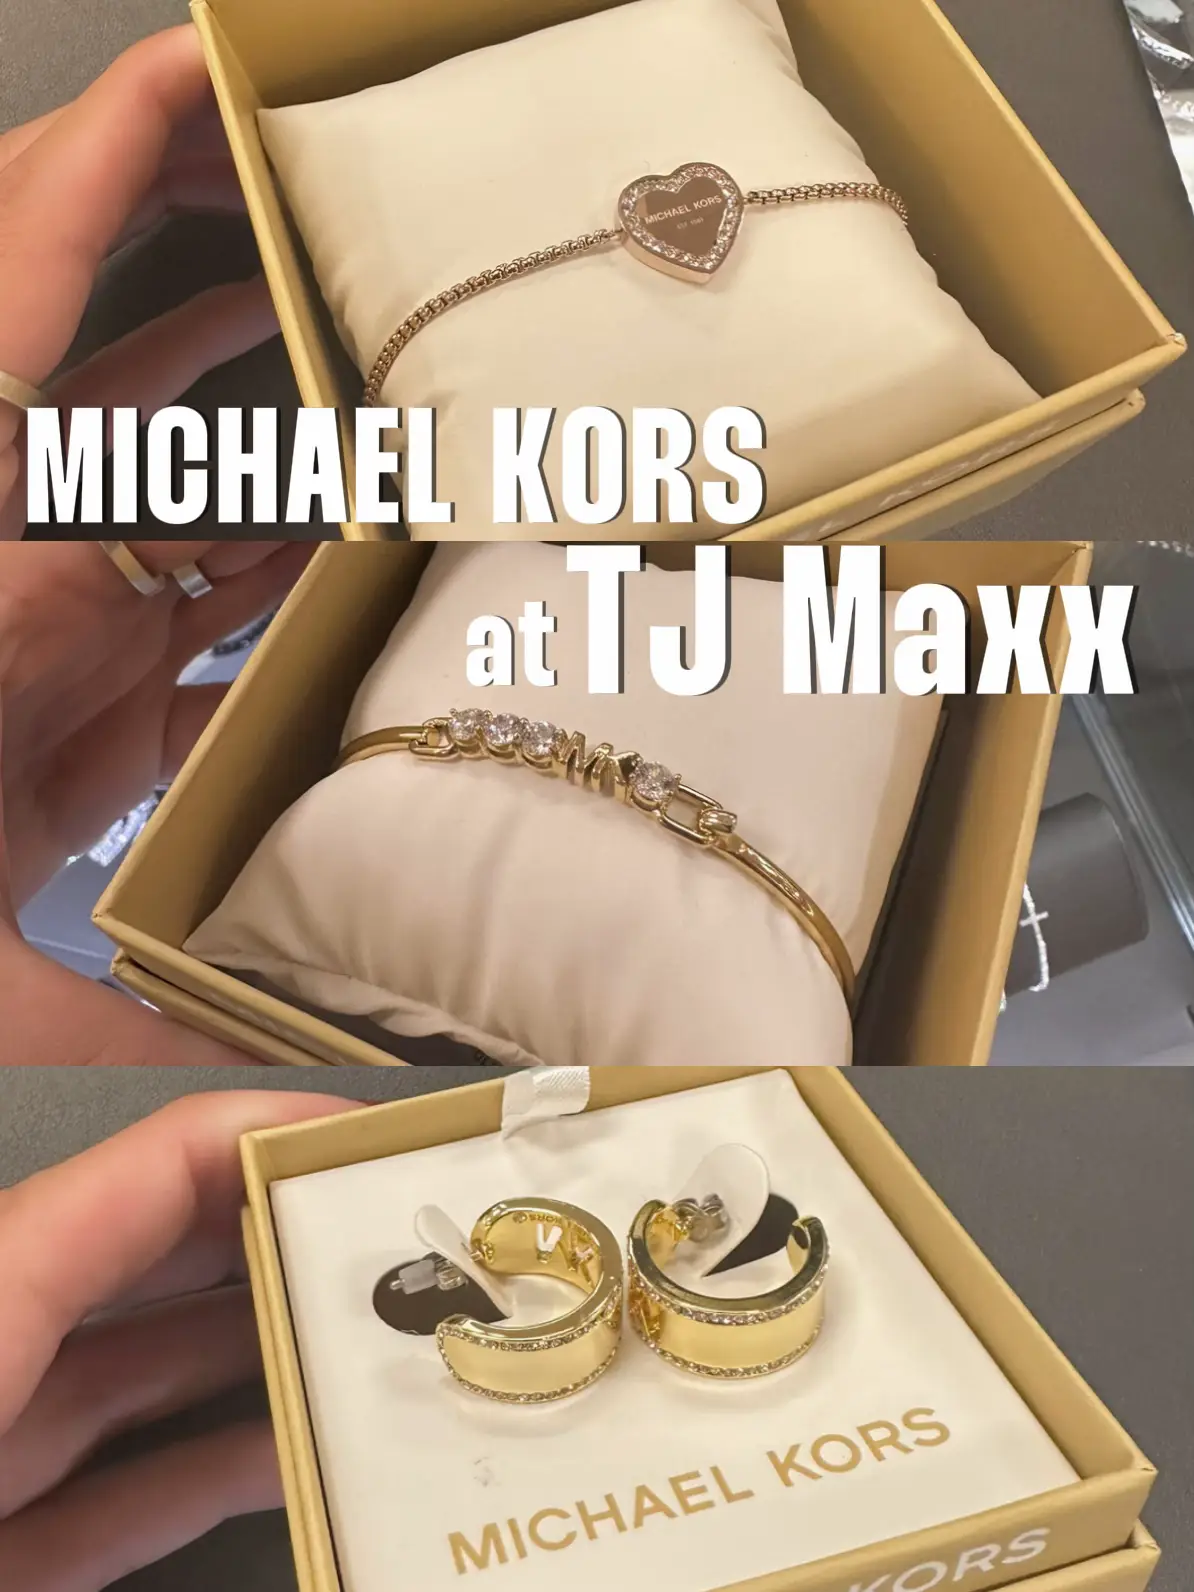 Michael Kors at Marshalls, Gallery posted by Kim Battaglia